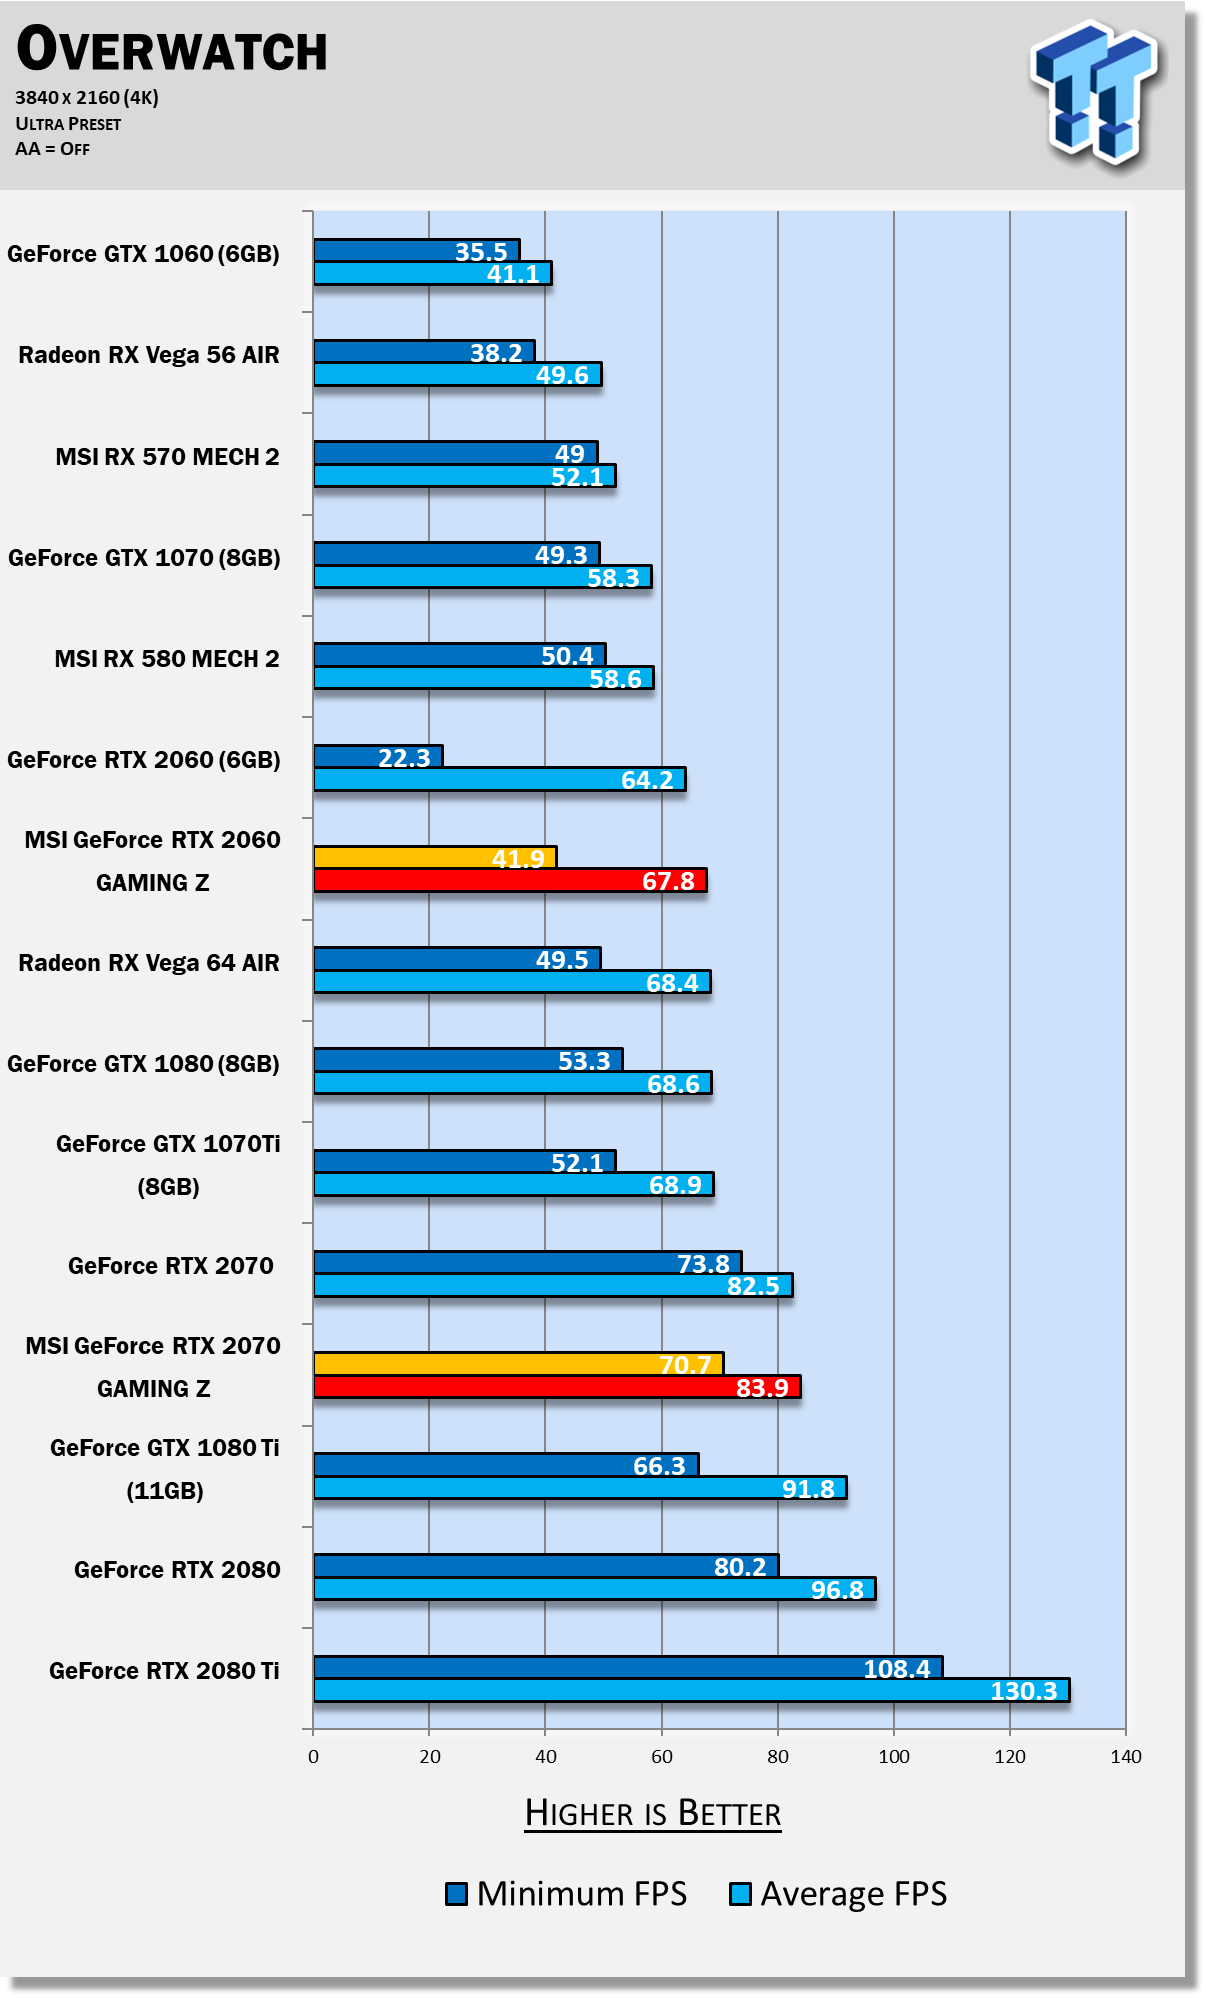 MSI GeForce RTX 2070 Z Review: Quietest 2070?!